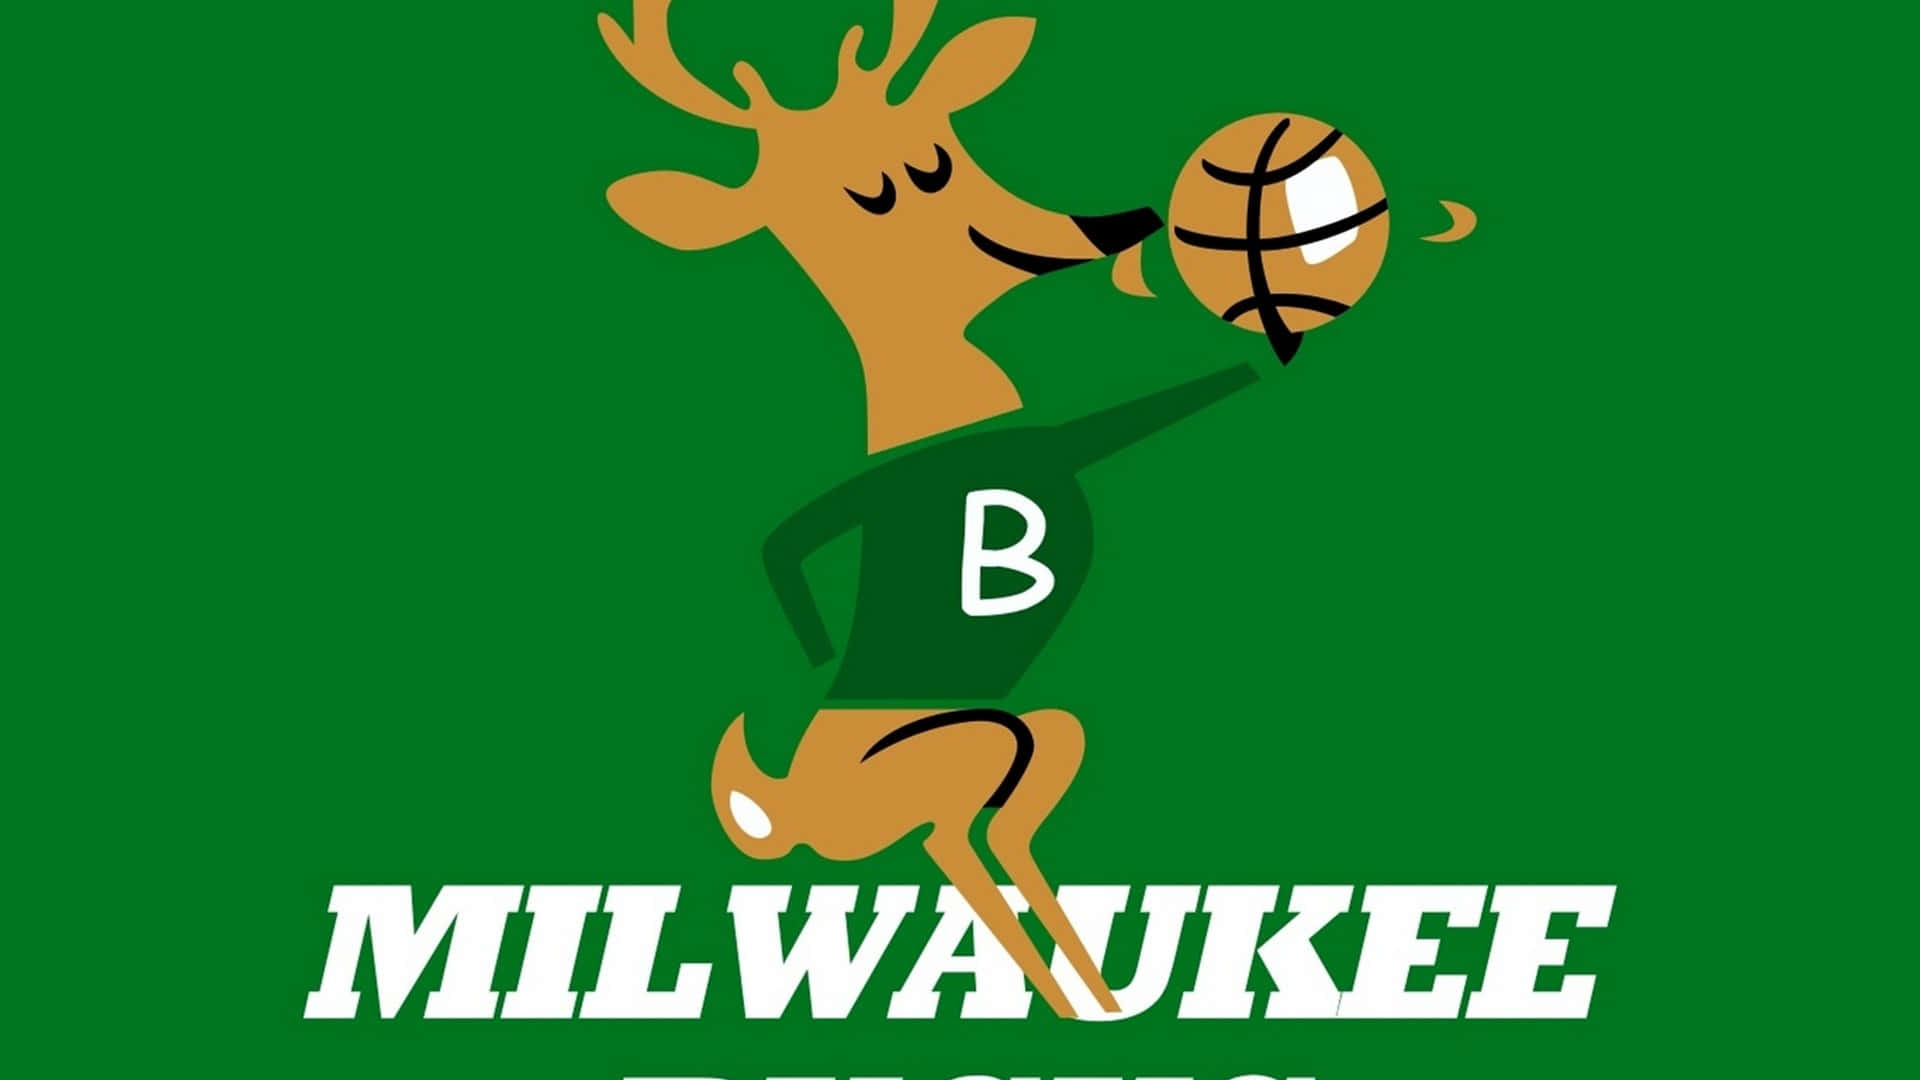 Milwaukeebucks-logo Wallpaper